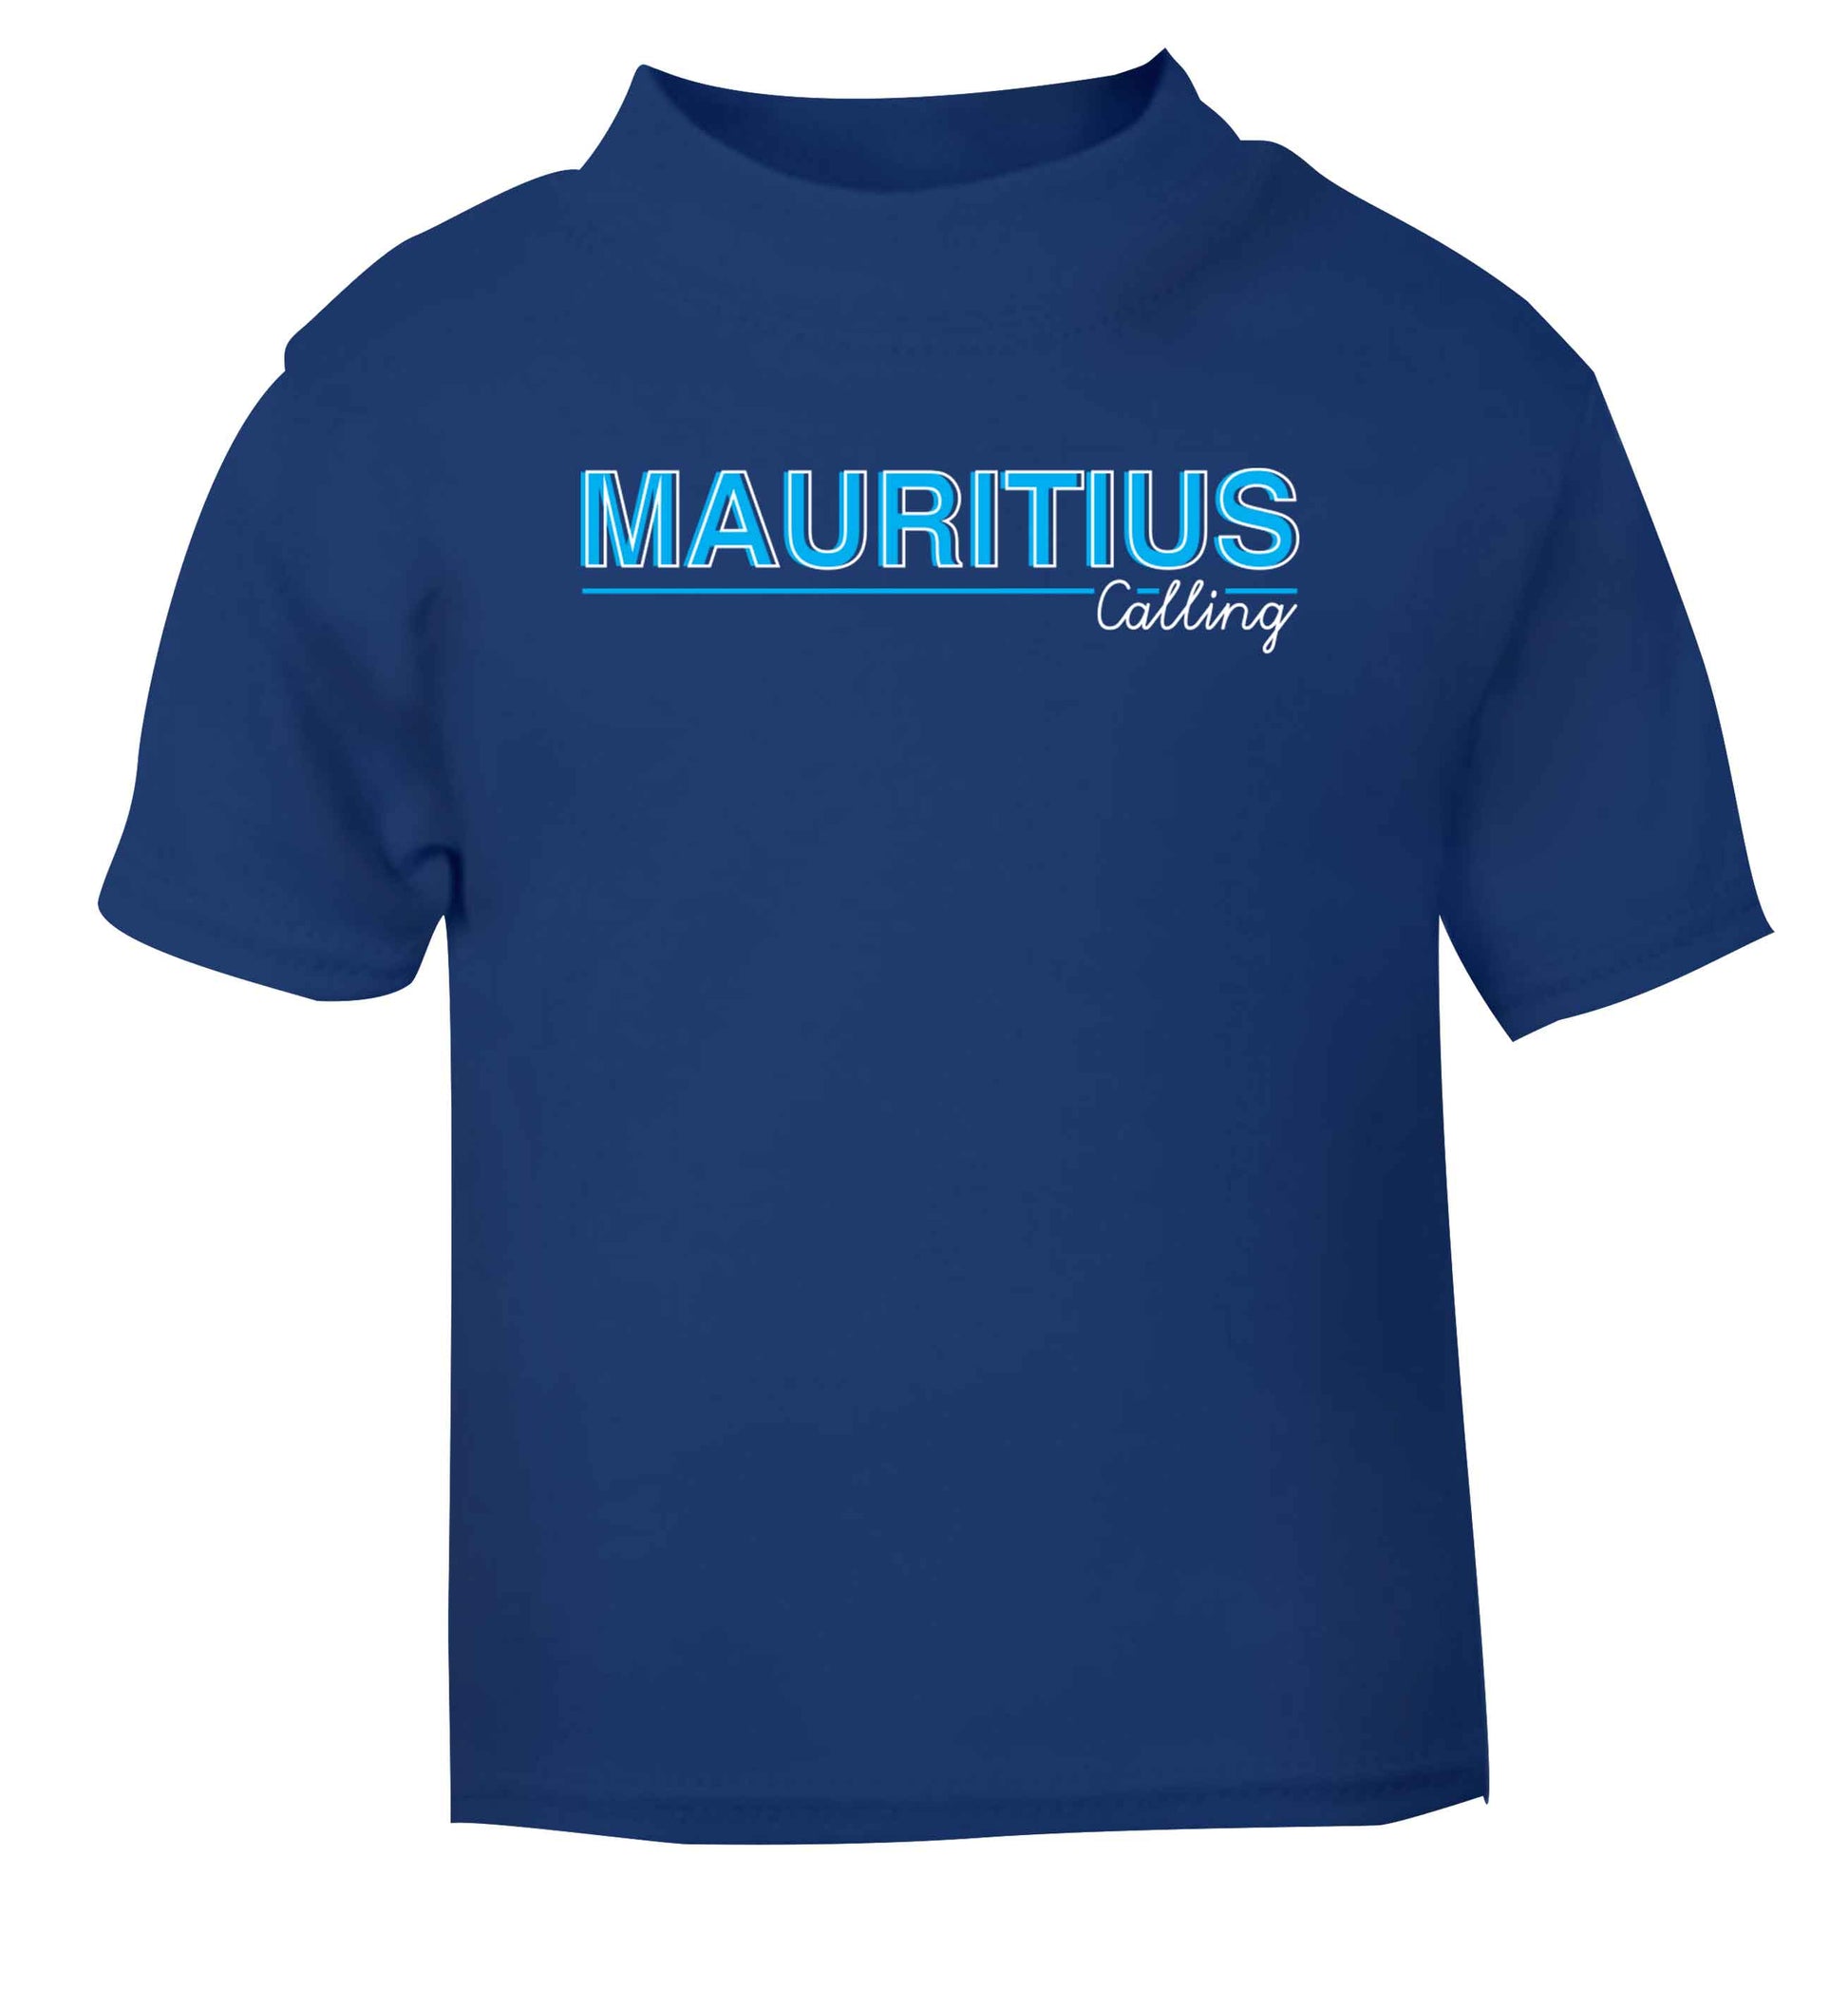 Mauritius calling blue Baby Toddler Tshirt 2 Years